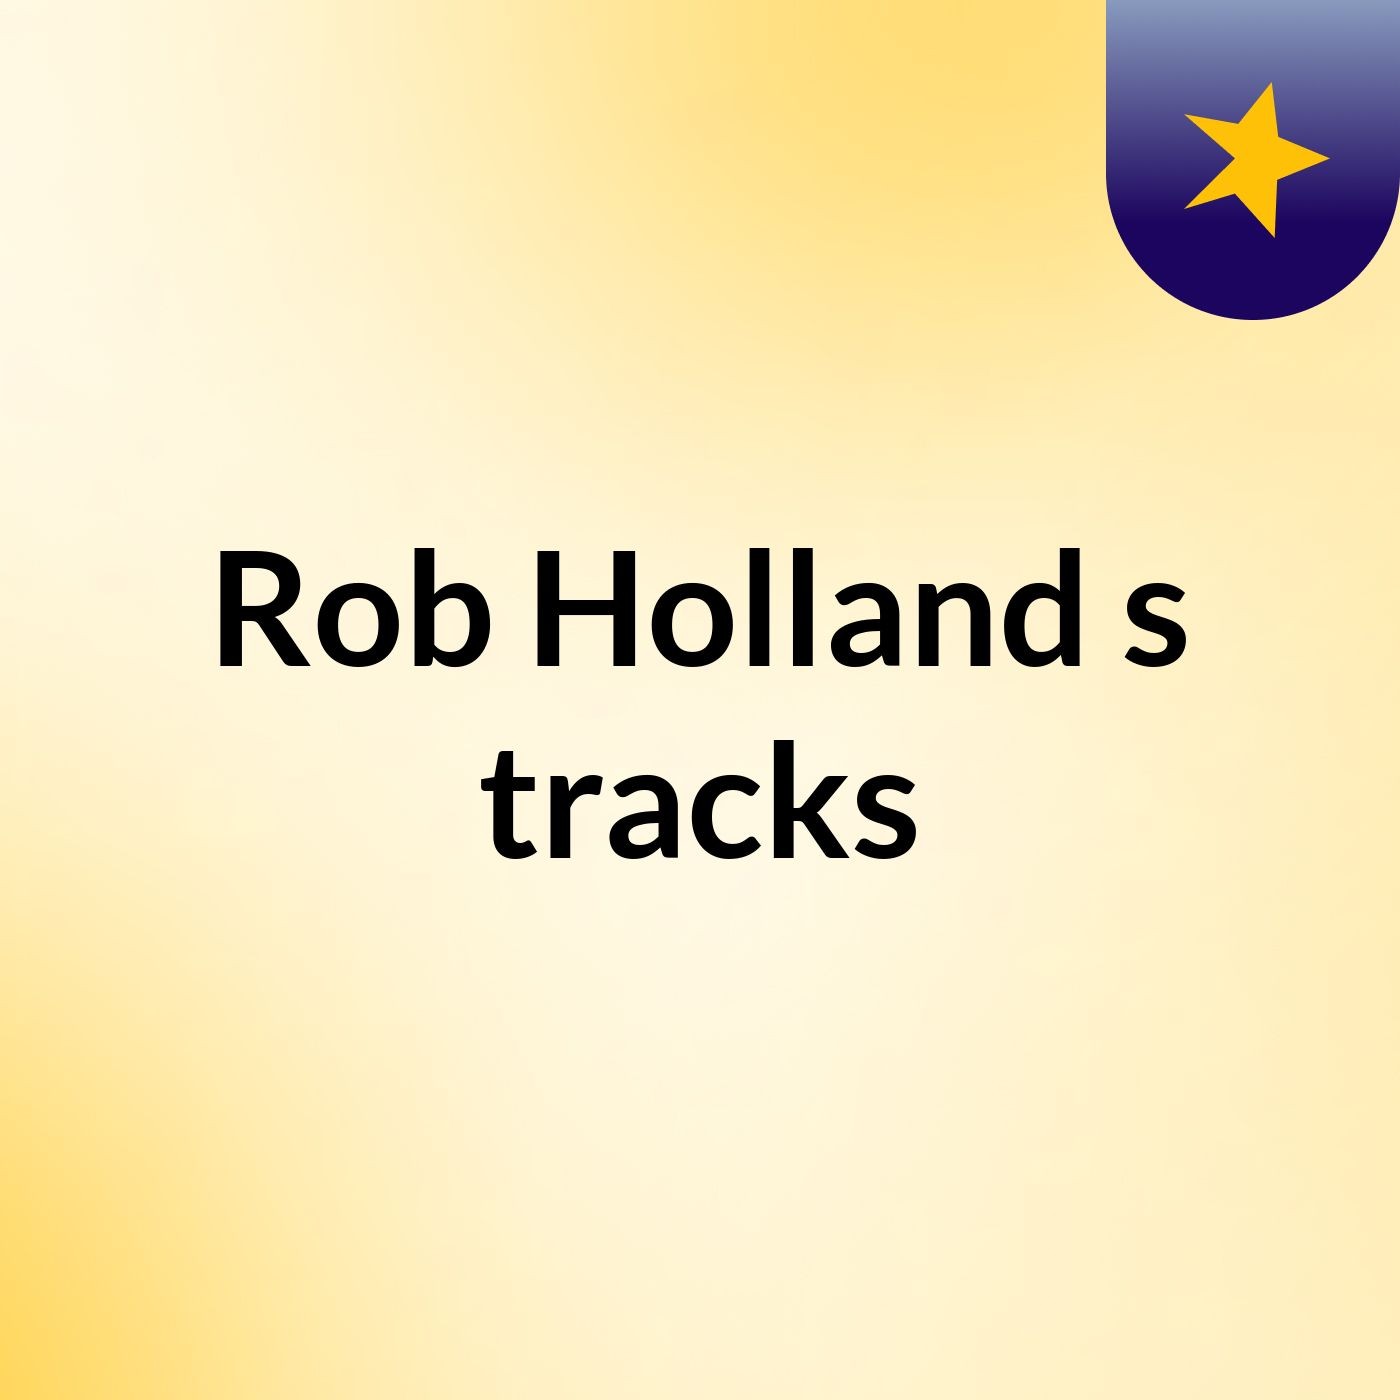 Rob Holland's tracks